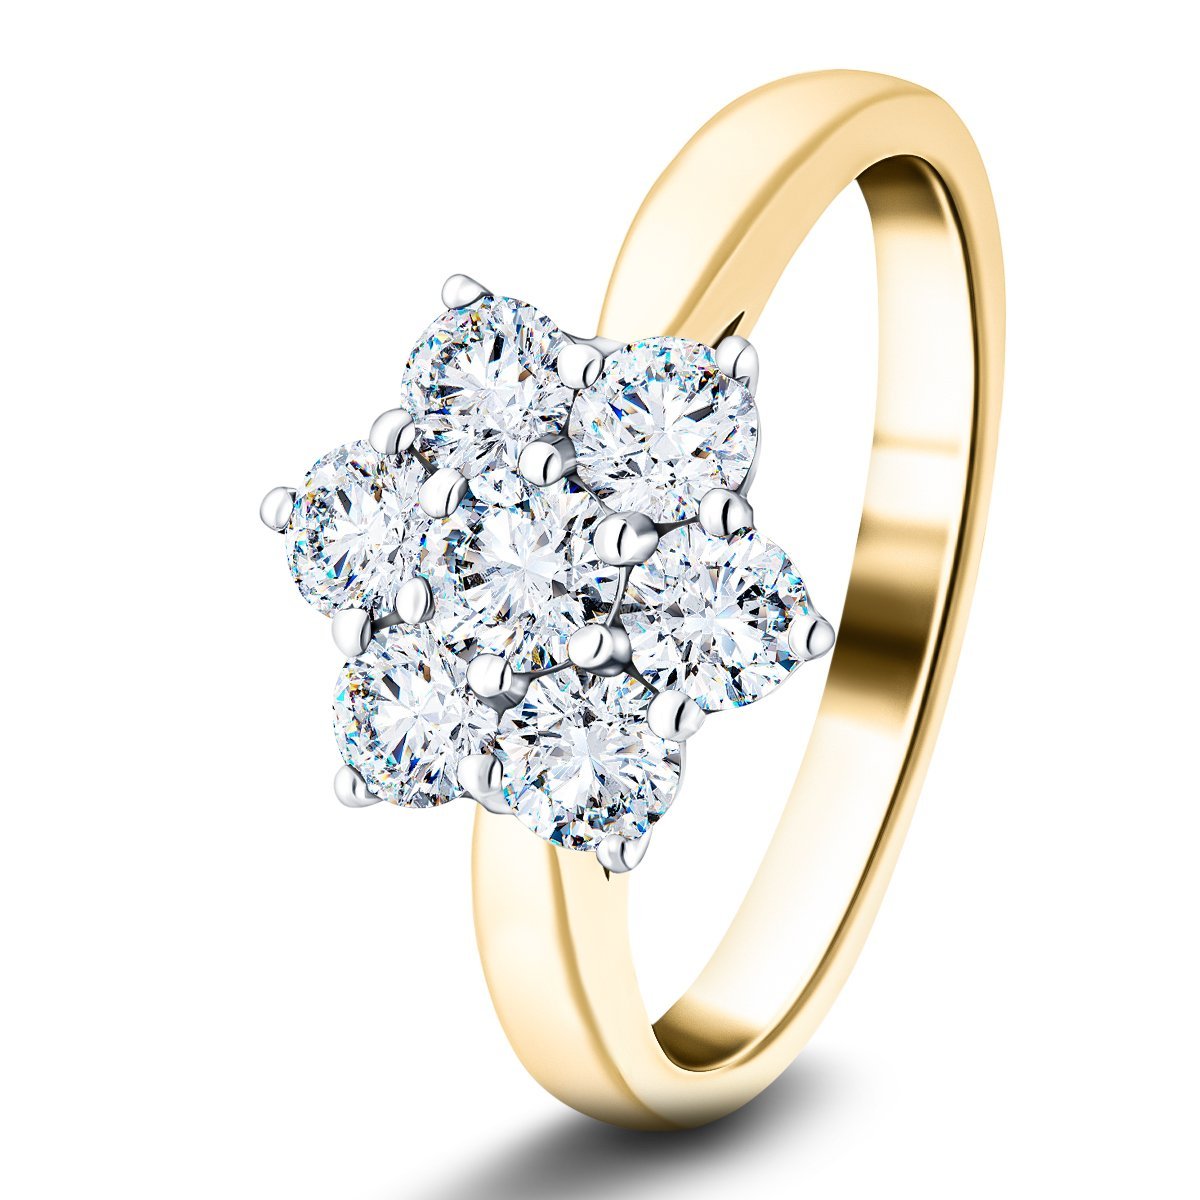 Diamond 1.00ct G/SI Quality 18k Yellow Gold Cluster Ring - All Diamond